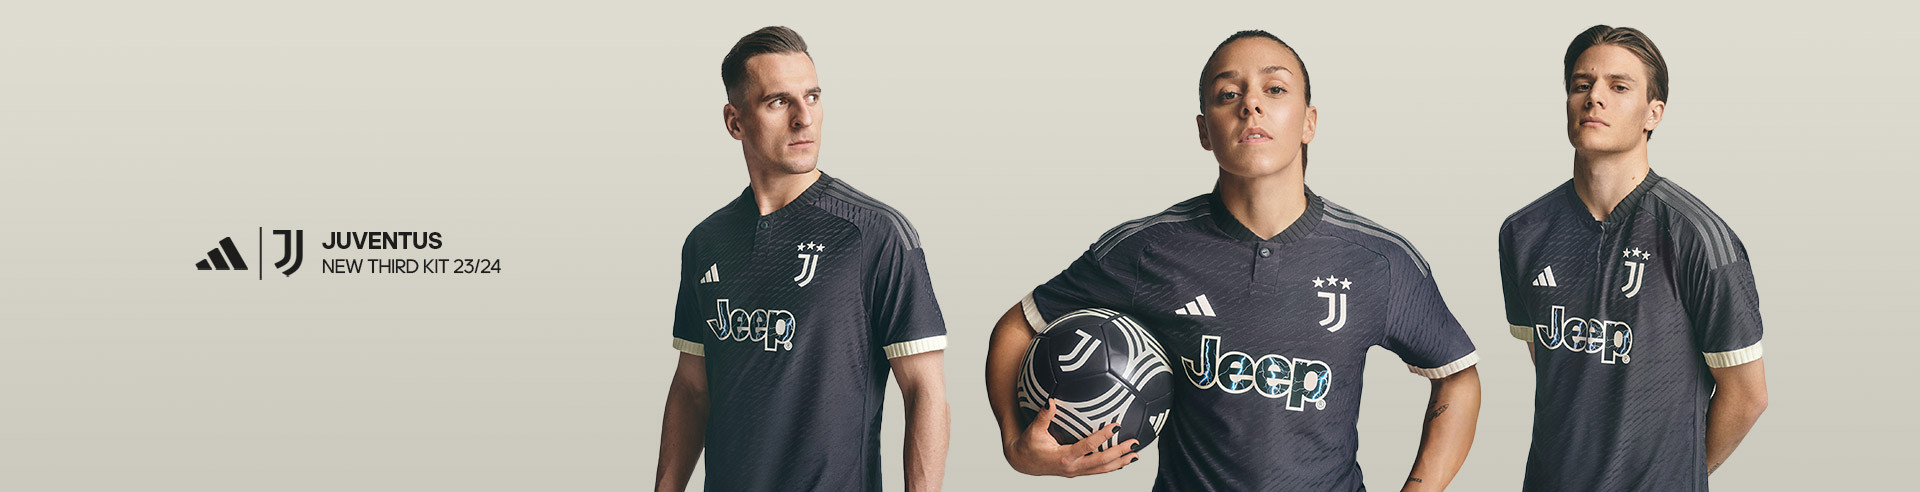 Adidas Juventus Thitd Kit 23/24 ALL